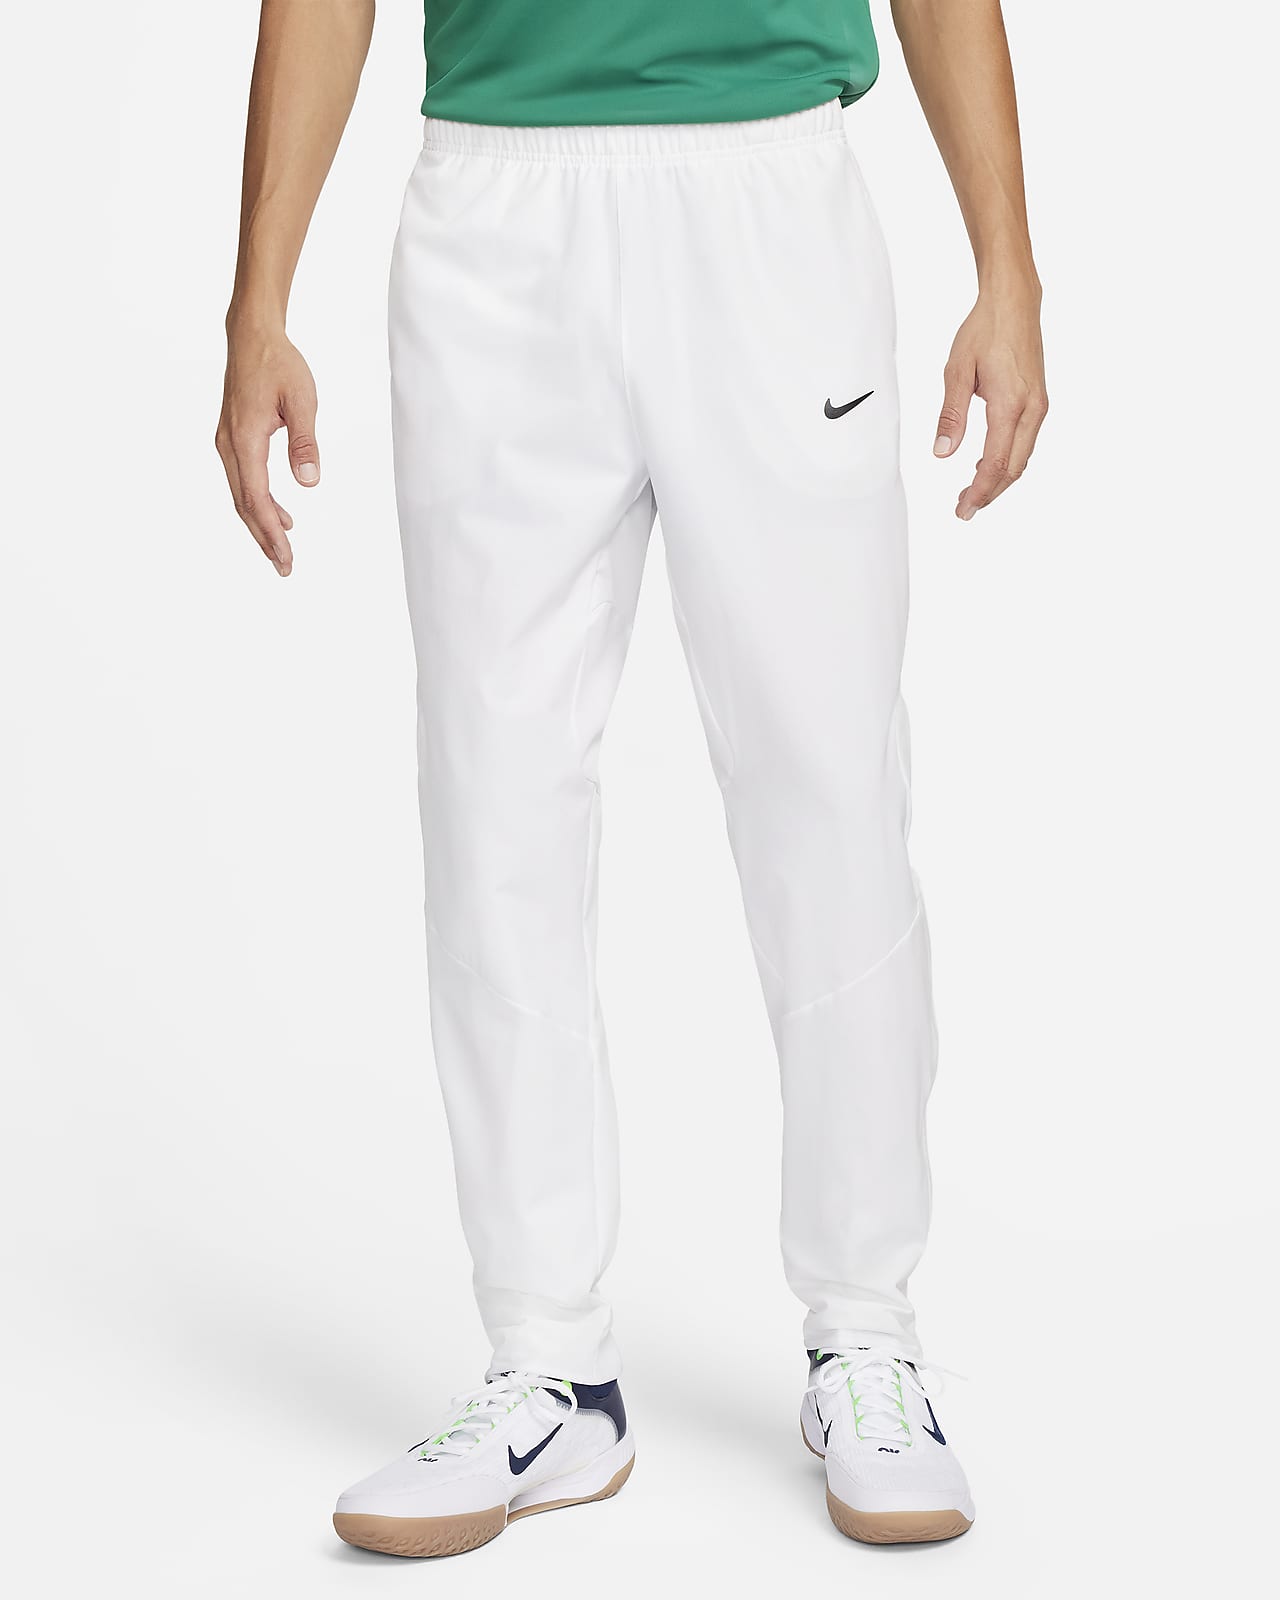 Nike Court Advantage Men's Tennis Pant White